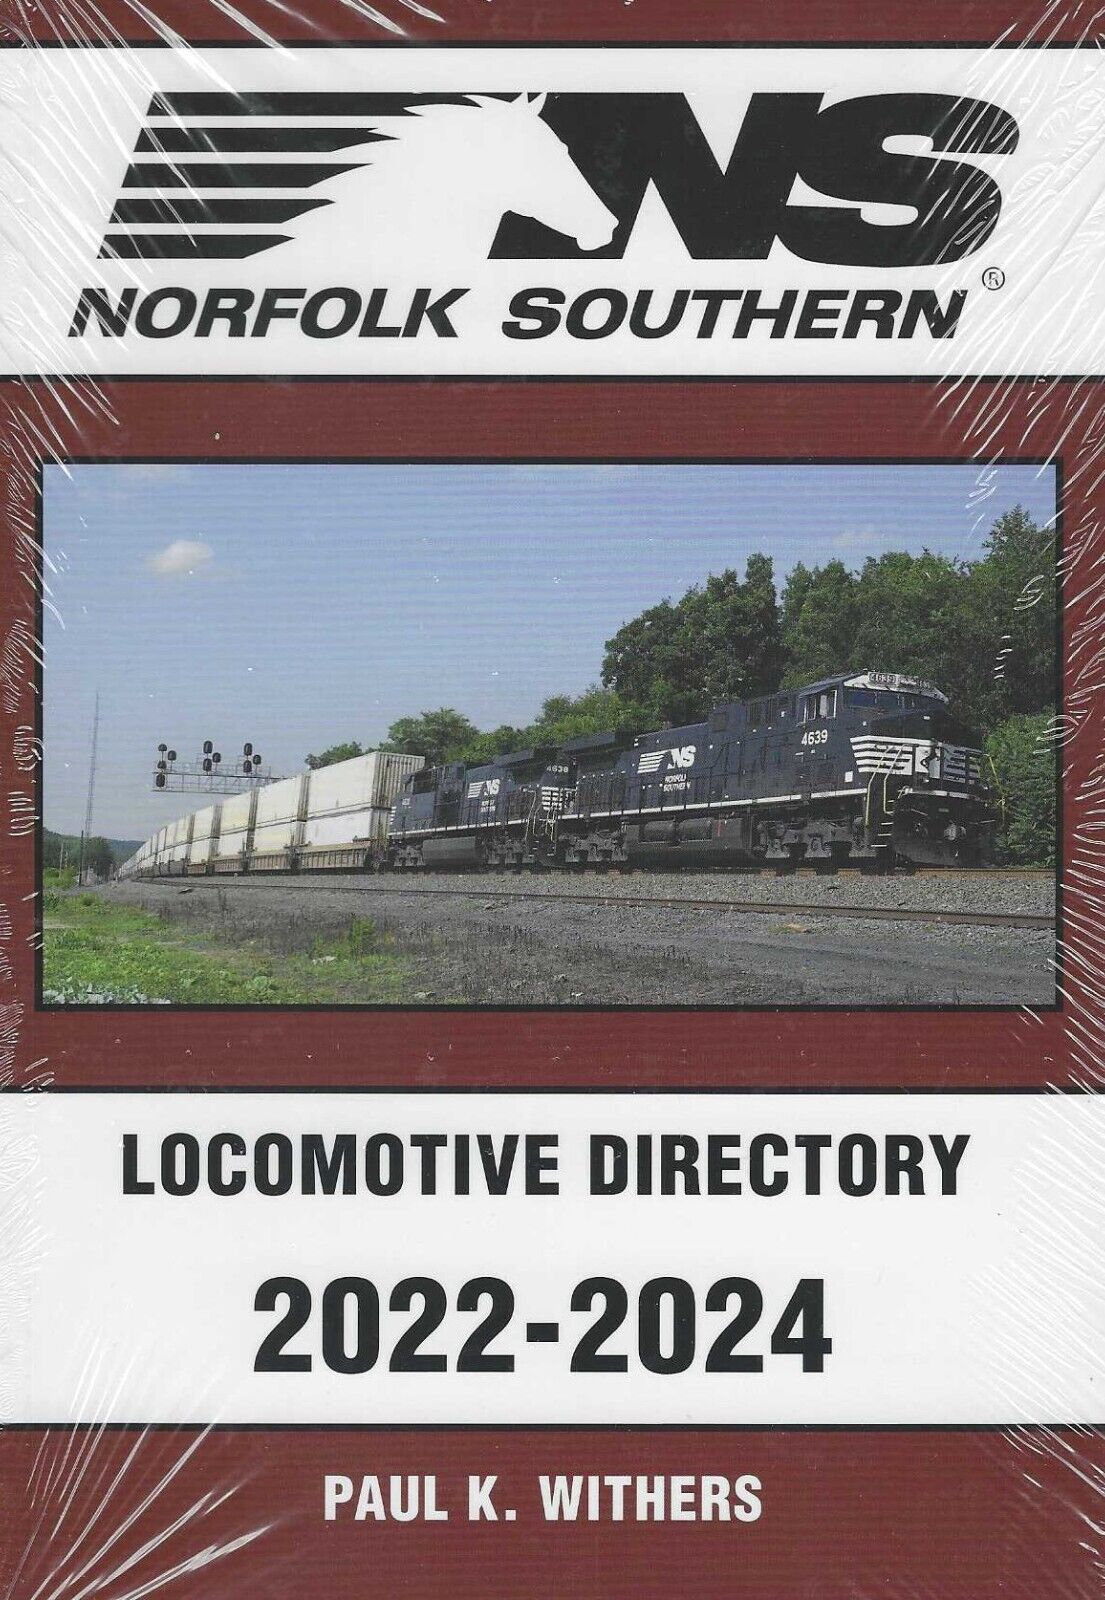 NORFOLK SOUTHERN Locomotive Directory, 2022-2024 - (BRAND NEW BOOK)